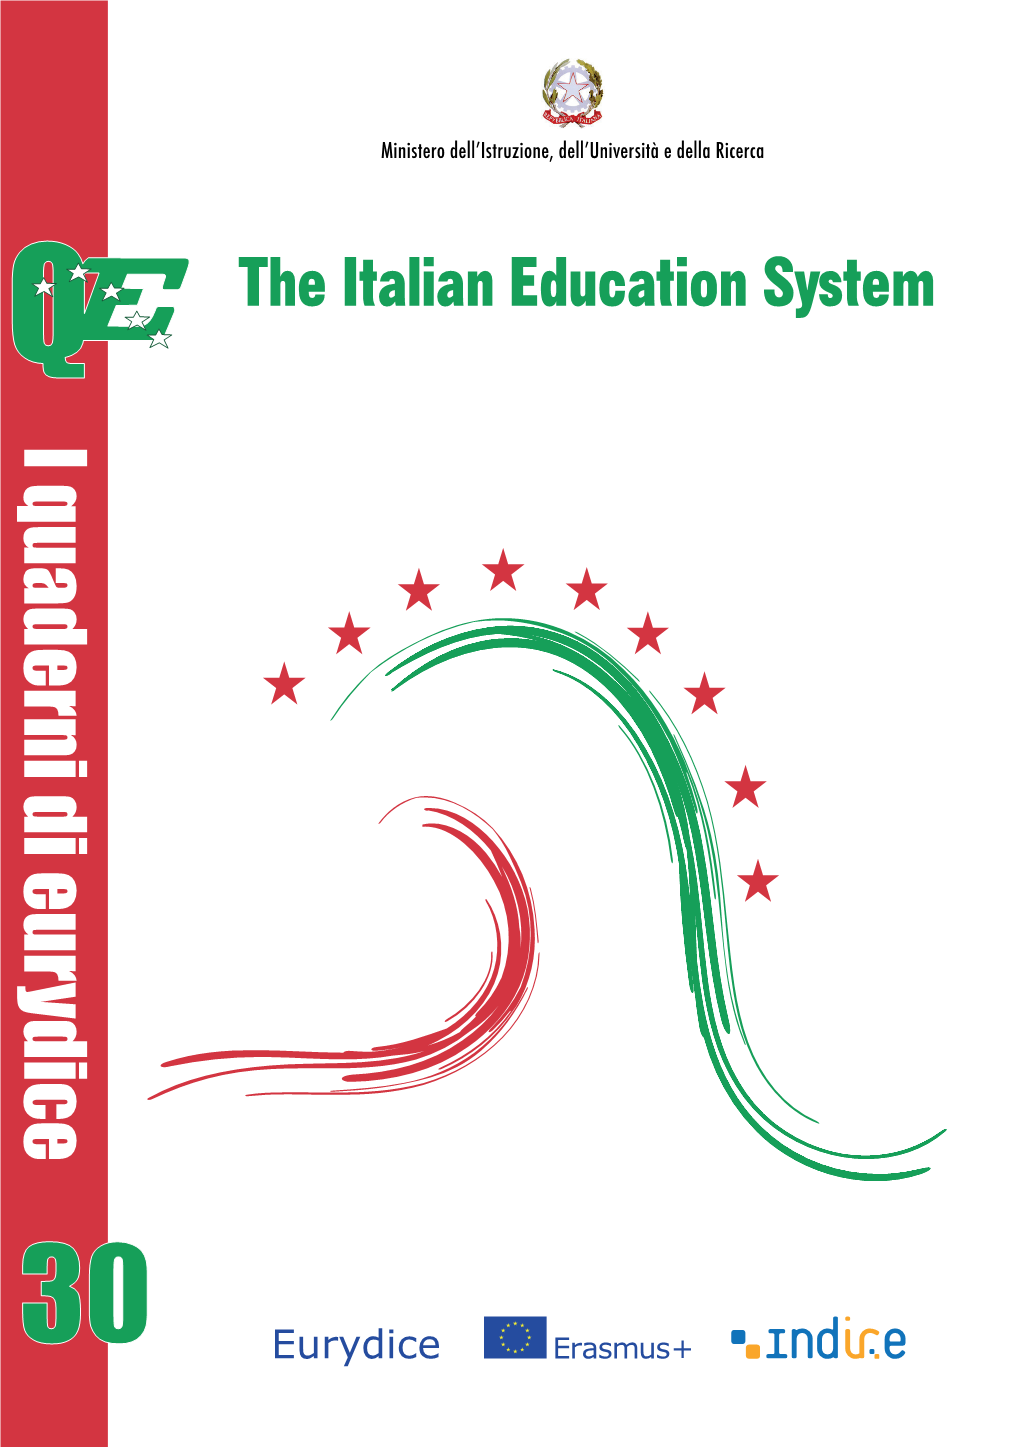 The Italian Education System